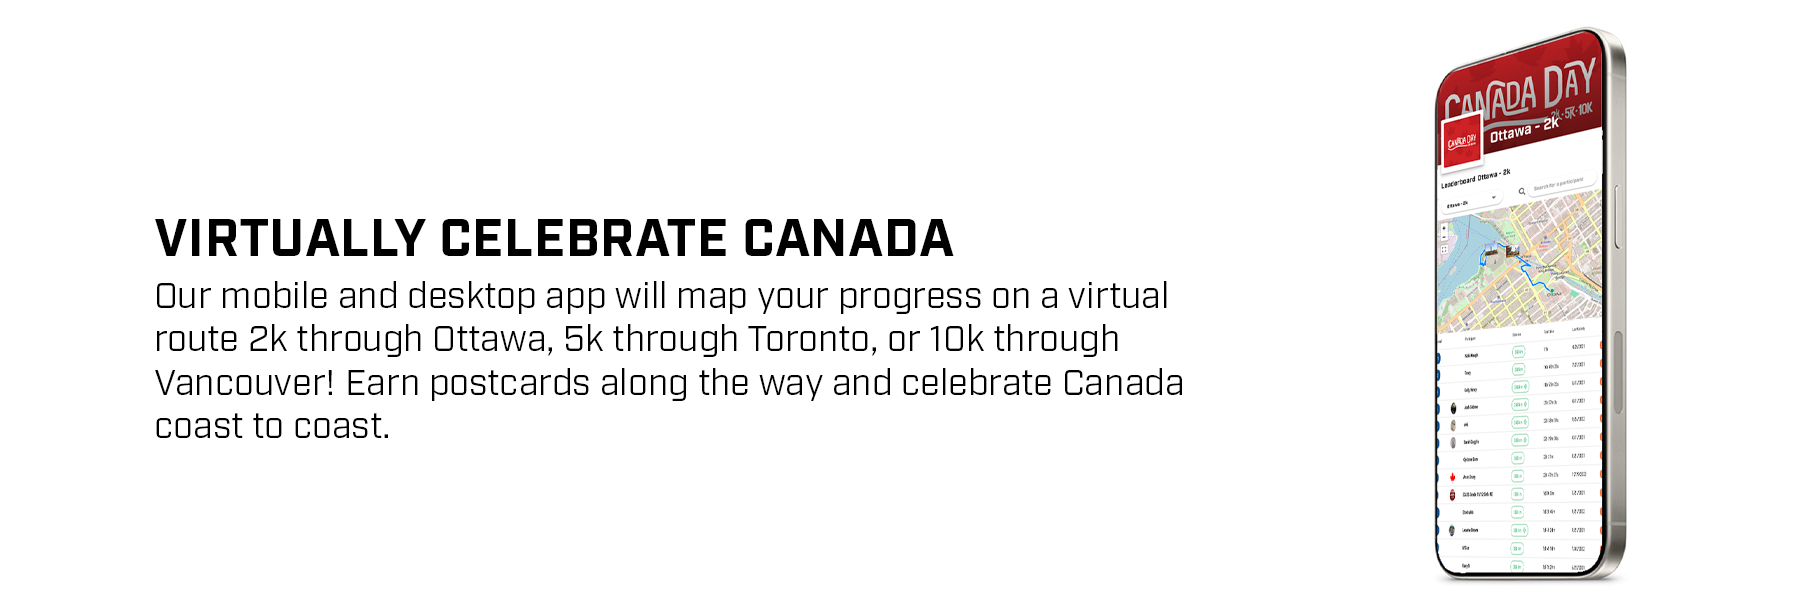 True_North_App_Screenshot_Canada_Day.png